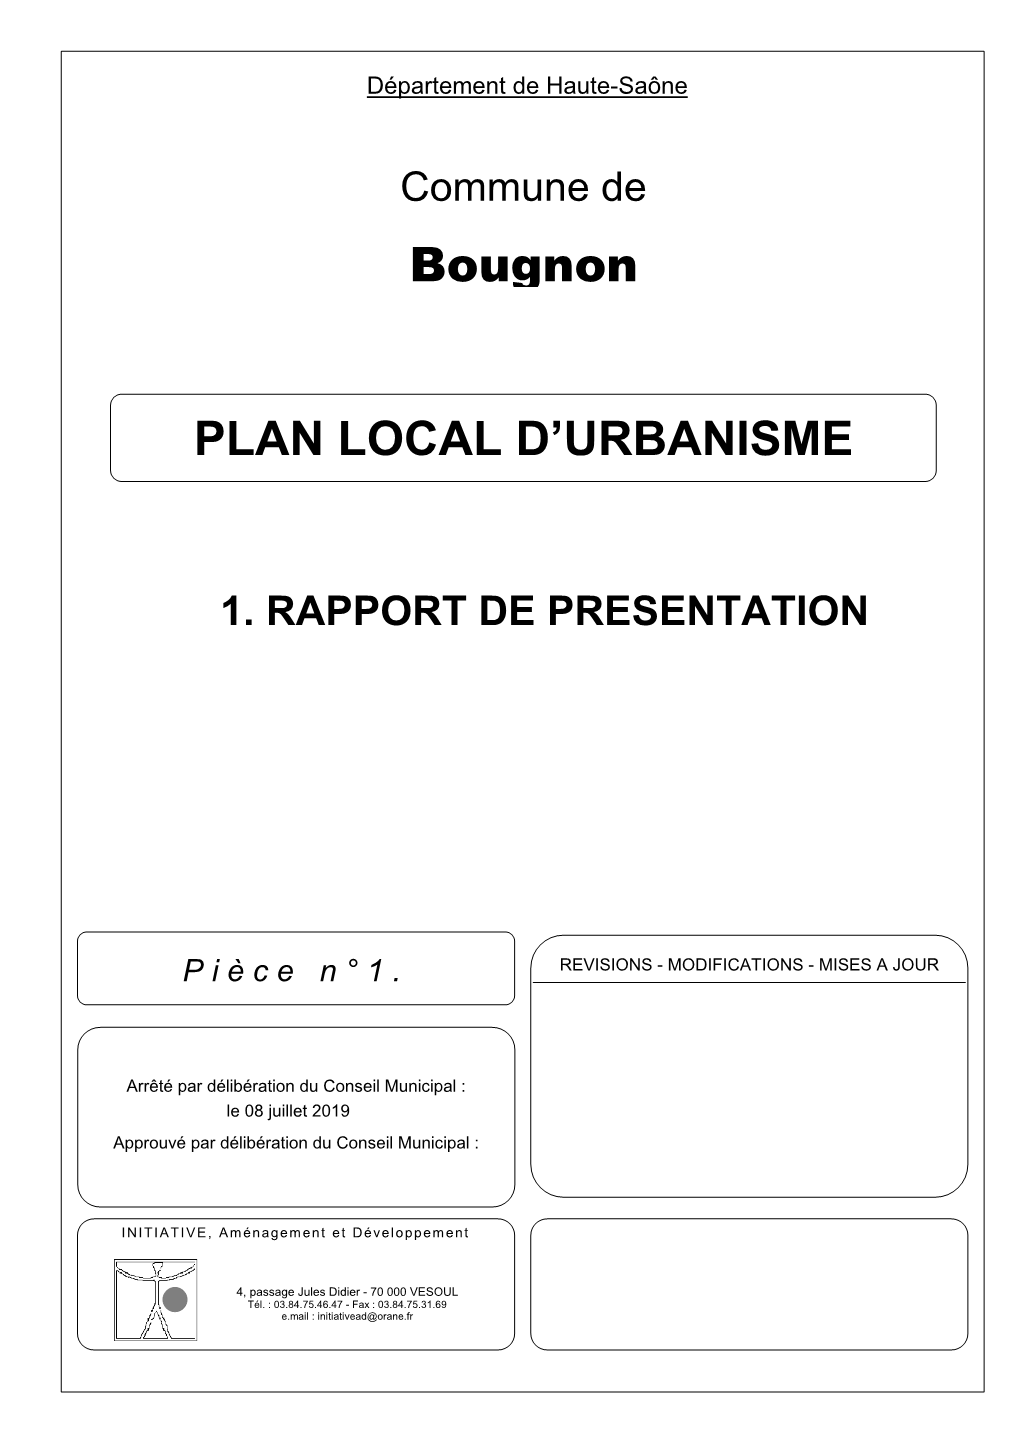 PLAN LOCAL D'urbanisme Bougnon